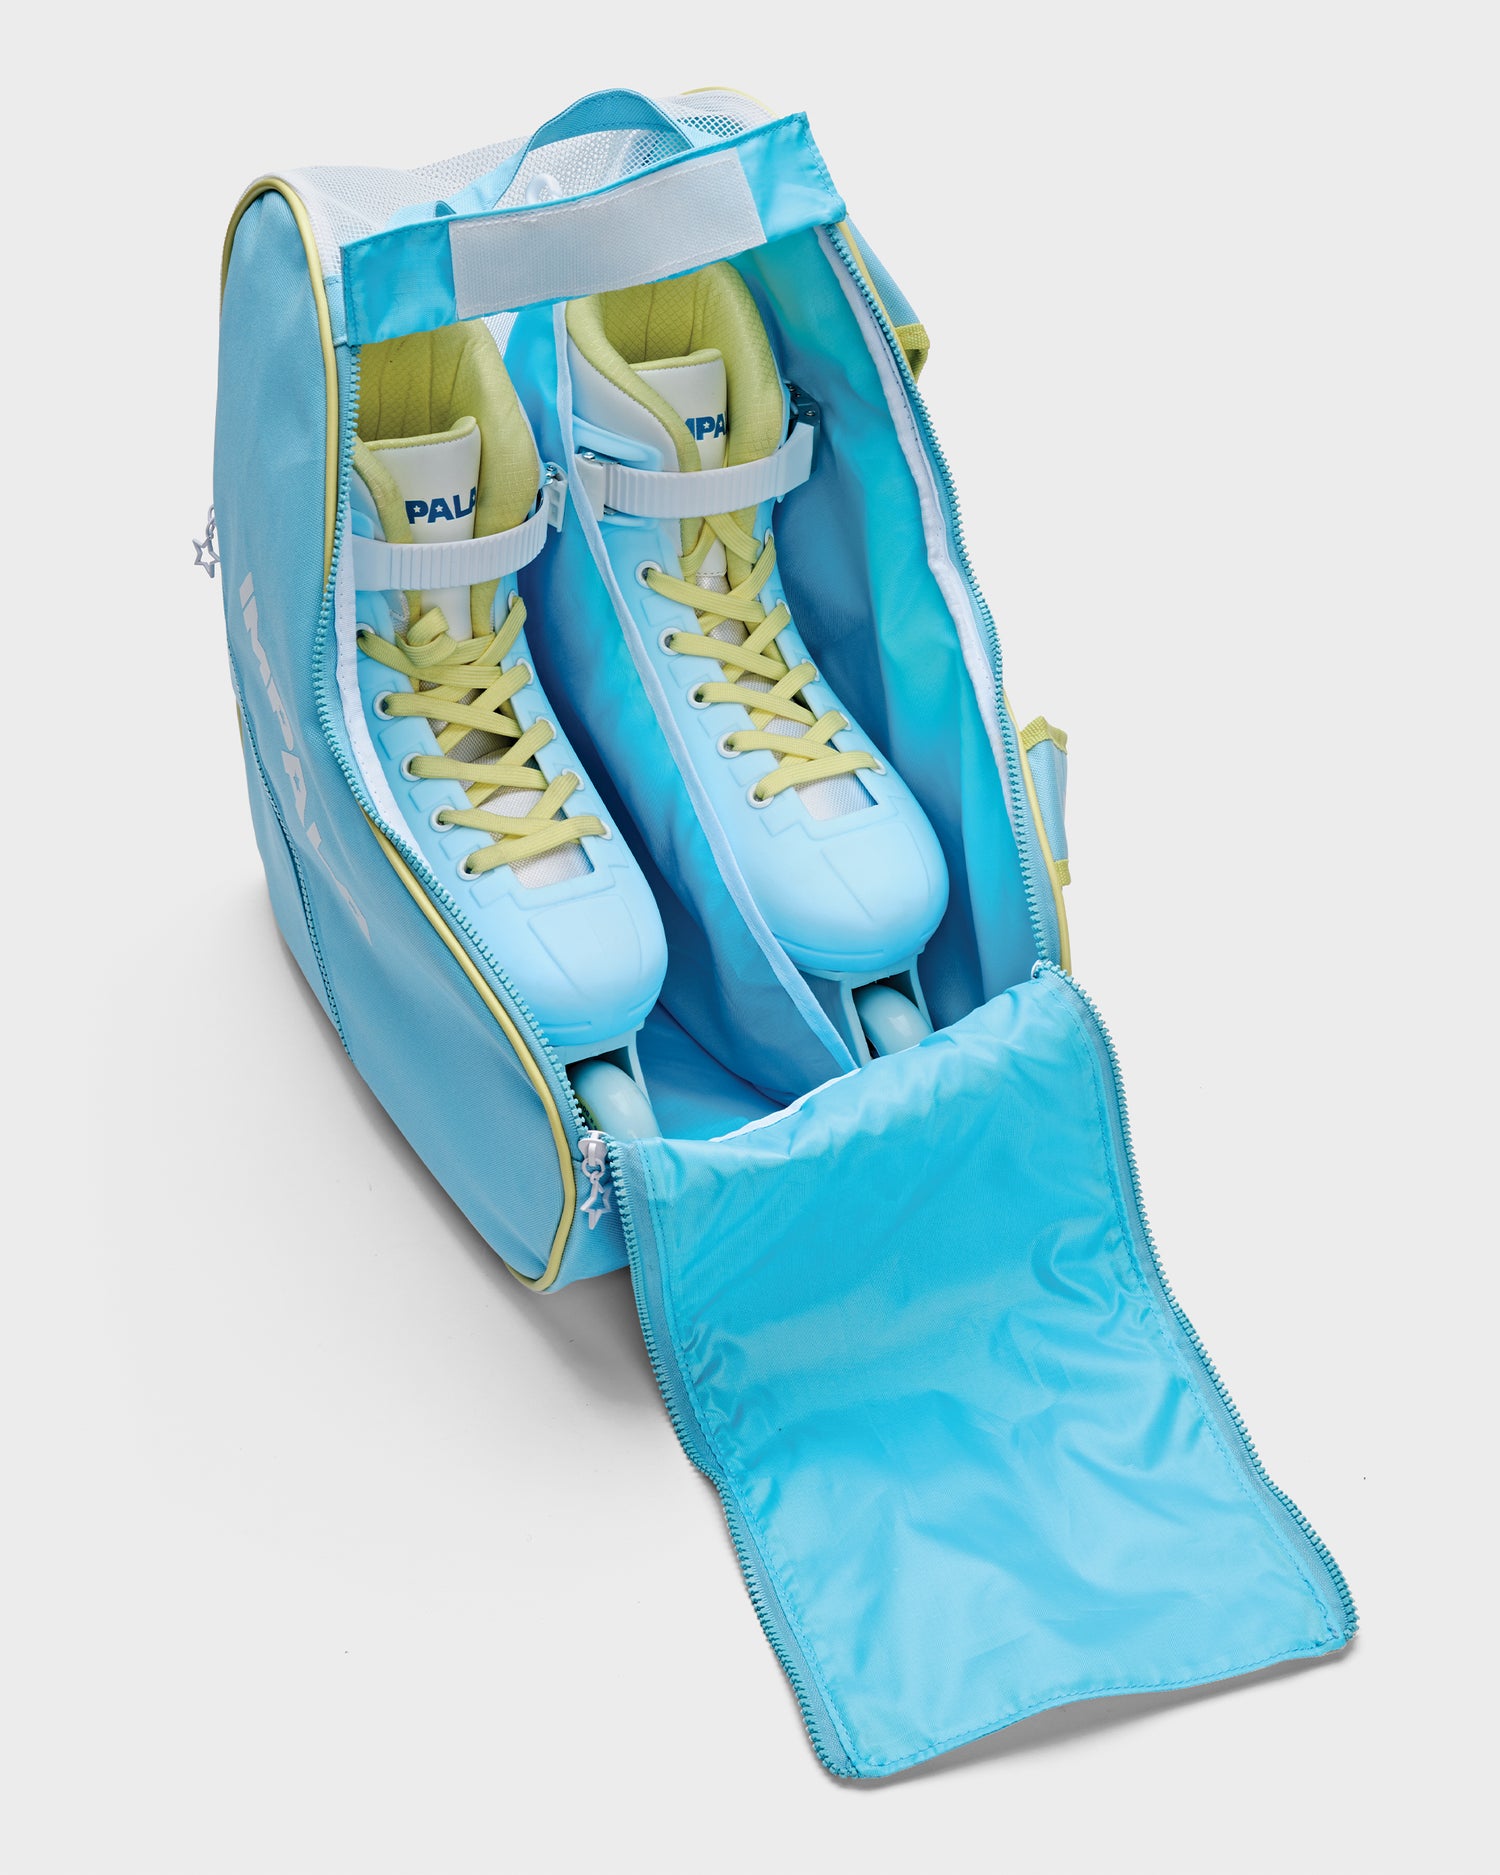 skates in Impala Skate Bag - Sky Blue/Yellow